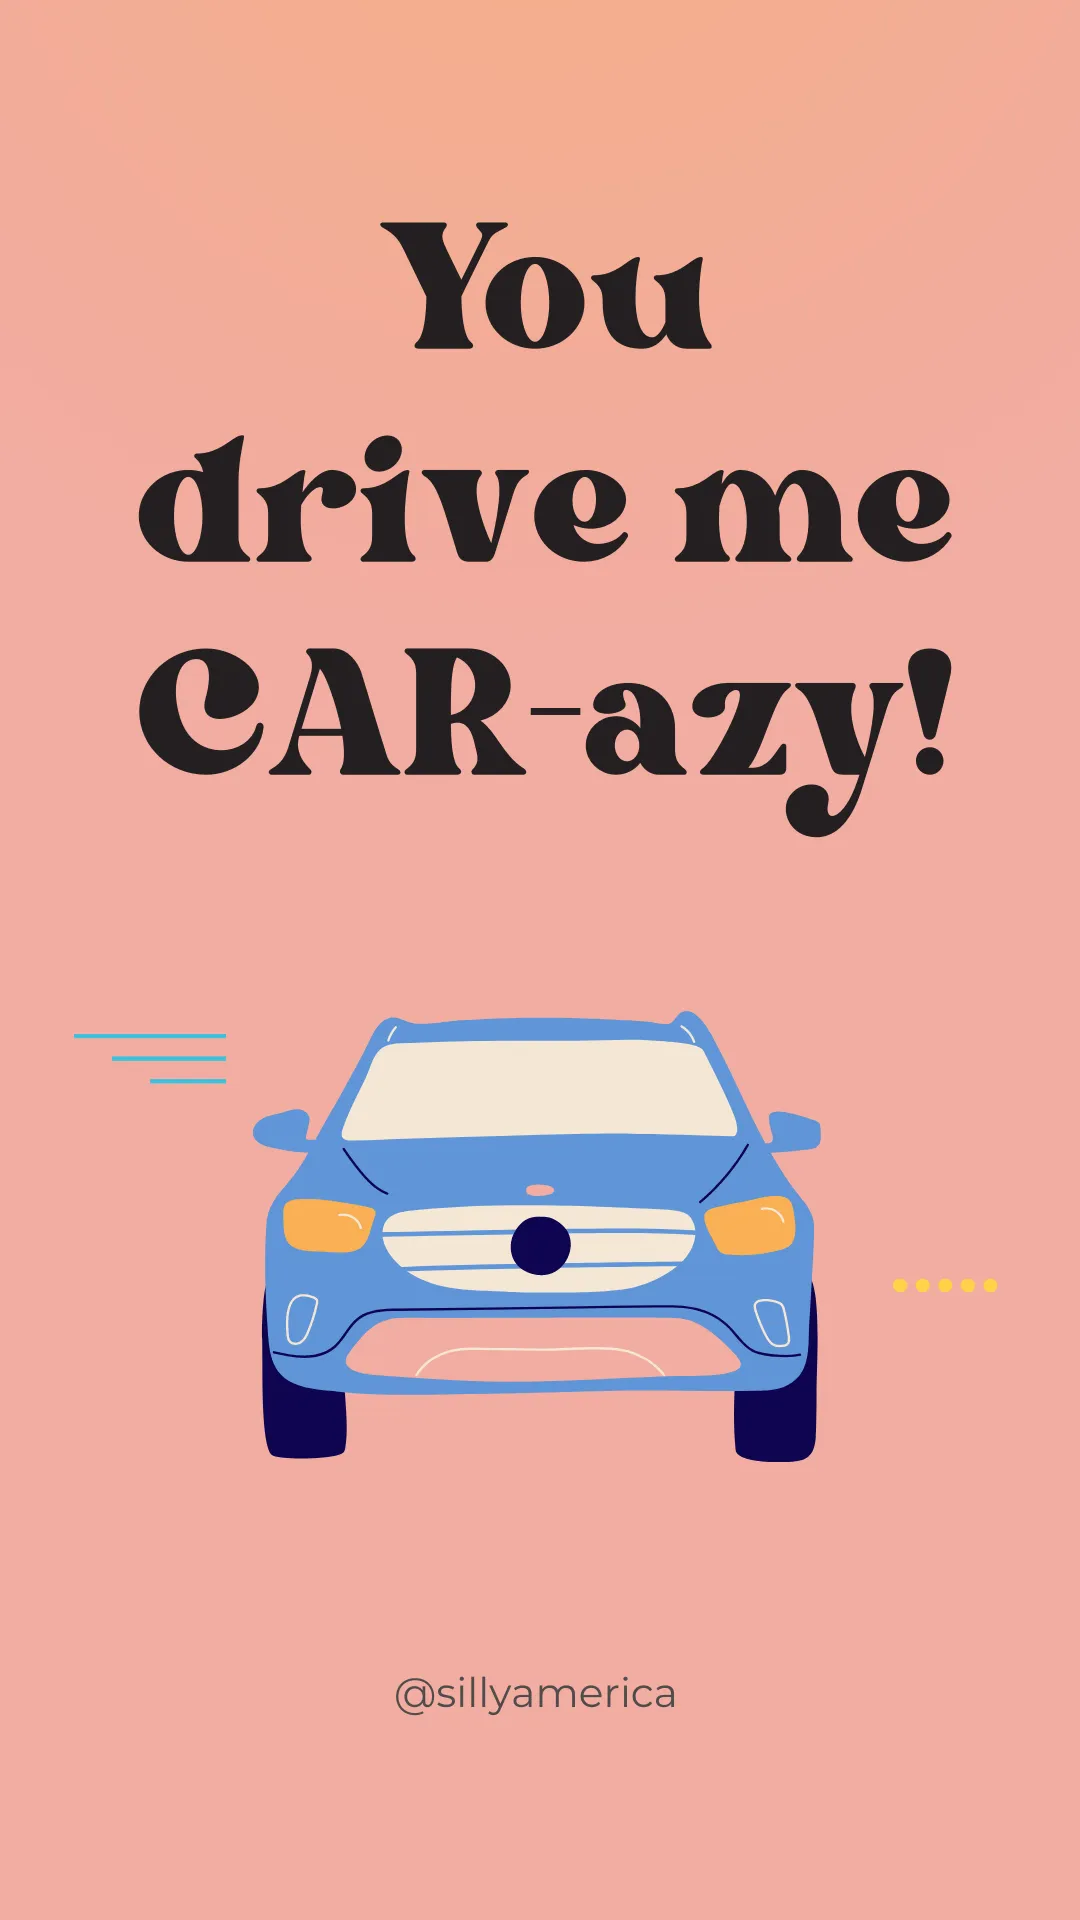 You drive me CAR-azy! - Road Trip Puns